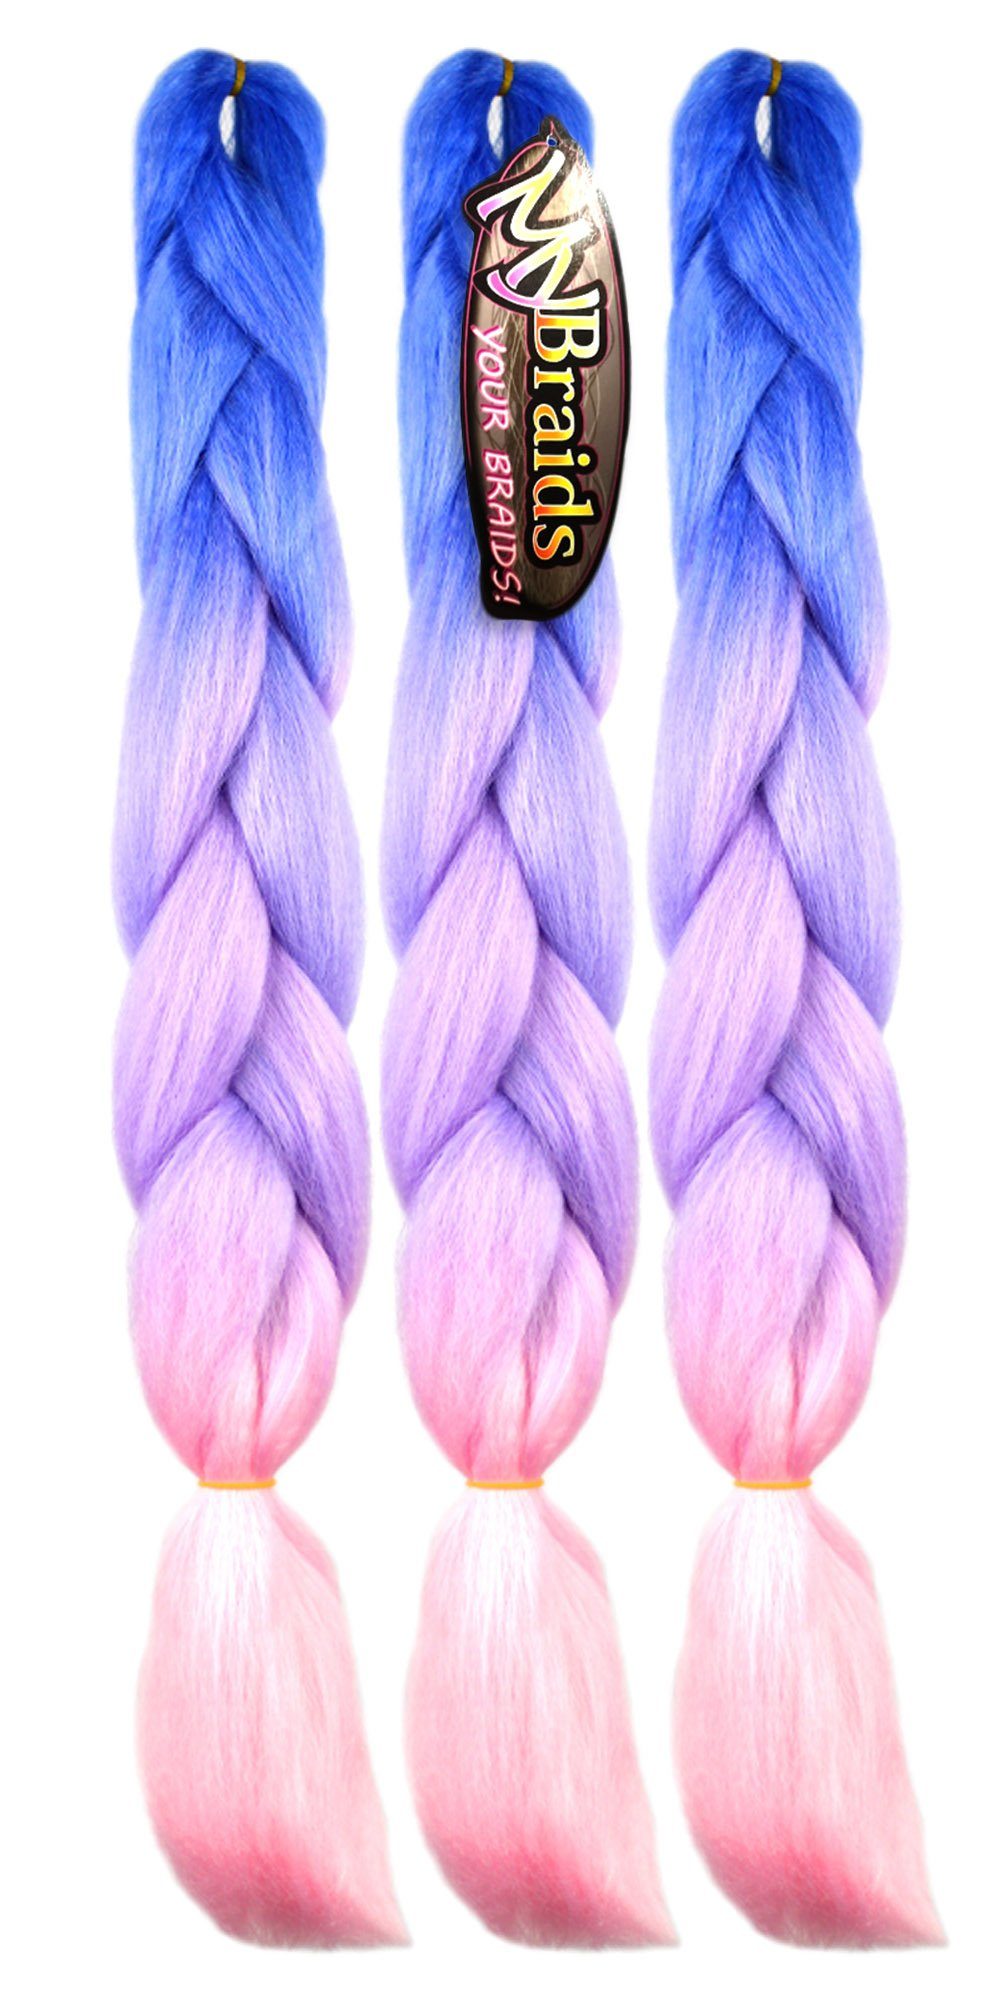 Braids YOUR Blau-Hellviolett-Hellrosa Zöpfe 34-CY im Pack MyBraids Kunsthaar-Extension 3-farbig Jumbo BRAIDS! 3er Flechthaar